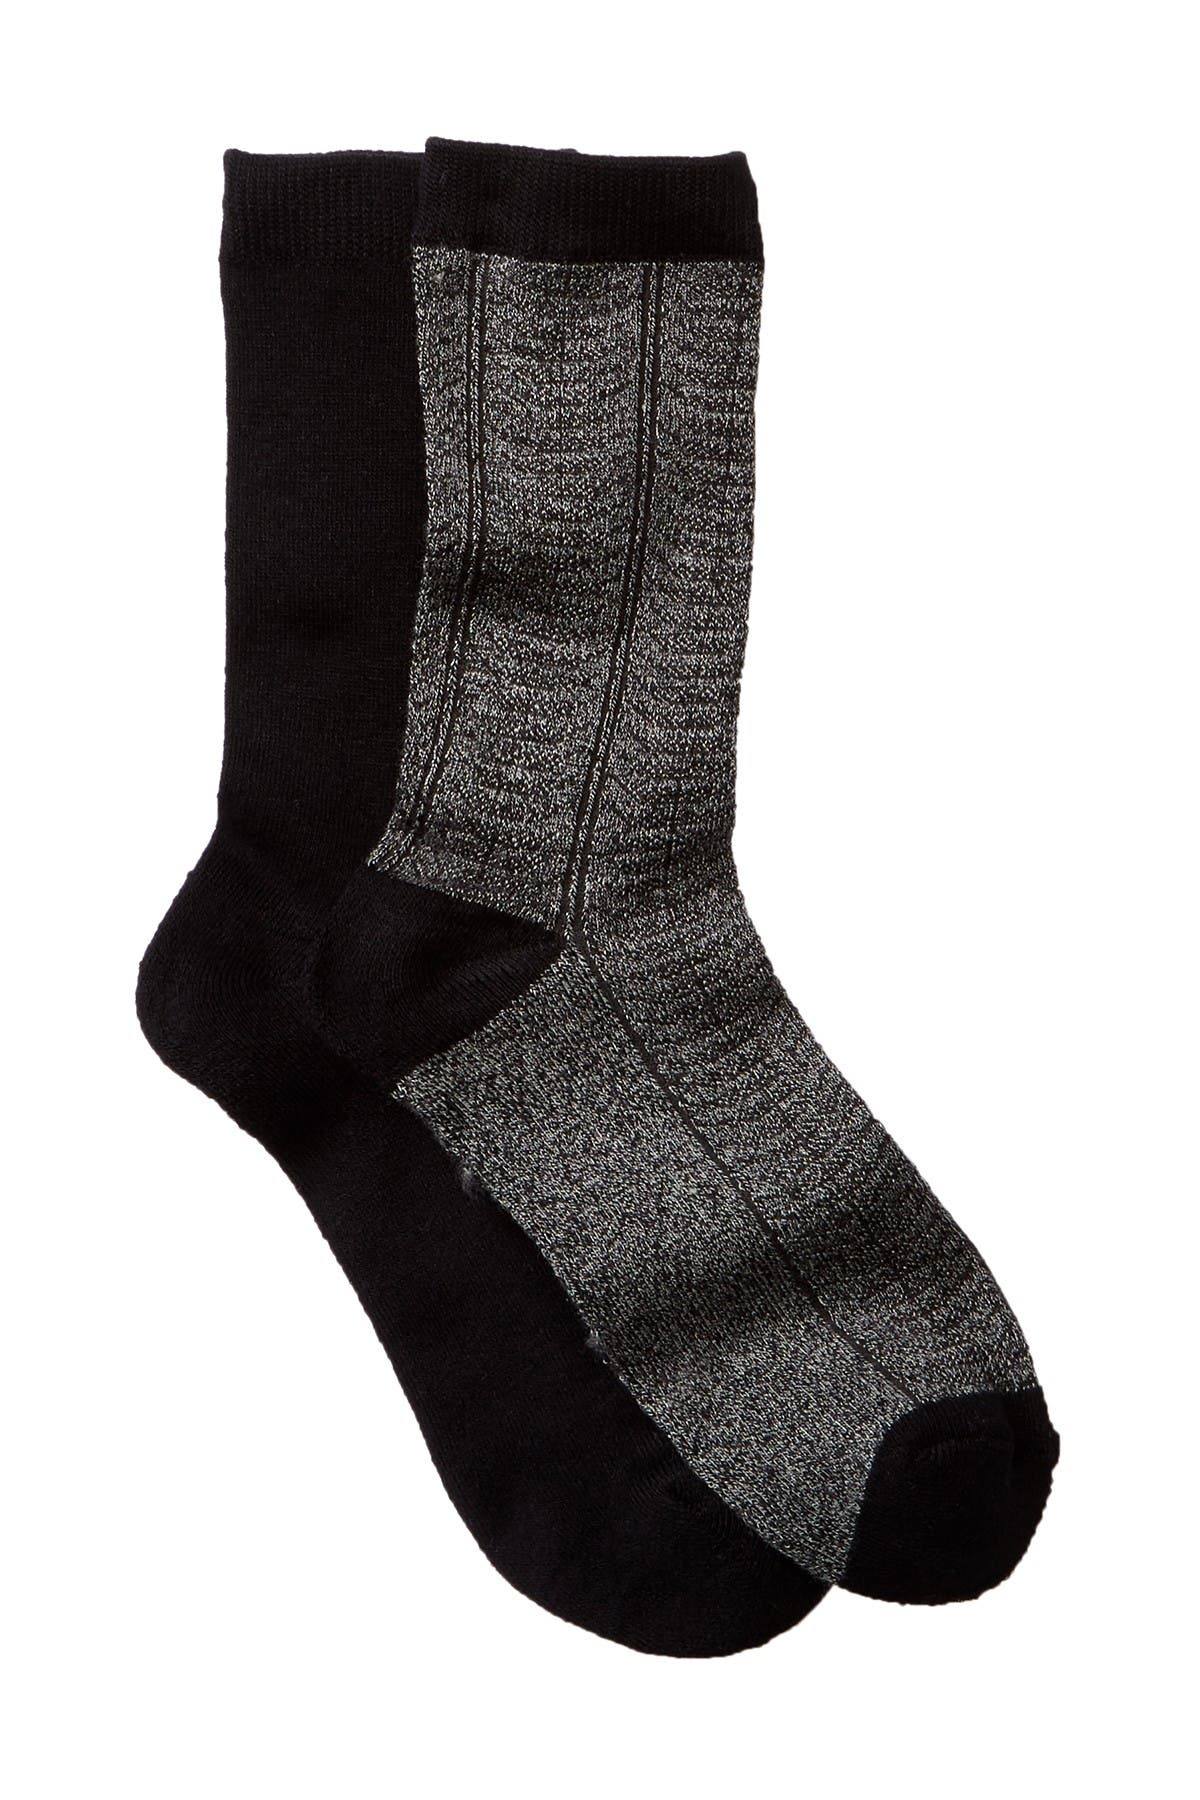 shimera | Pillow Sole Crew Socks - Pack of 2 | Nordstrom Rack